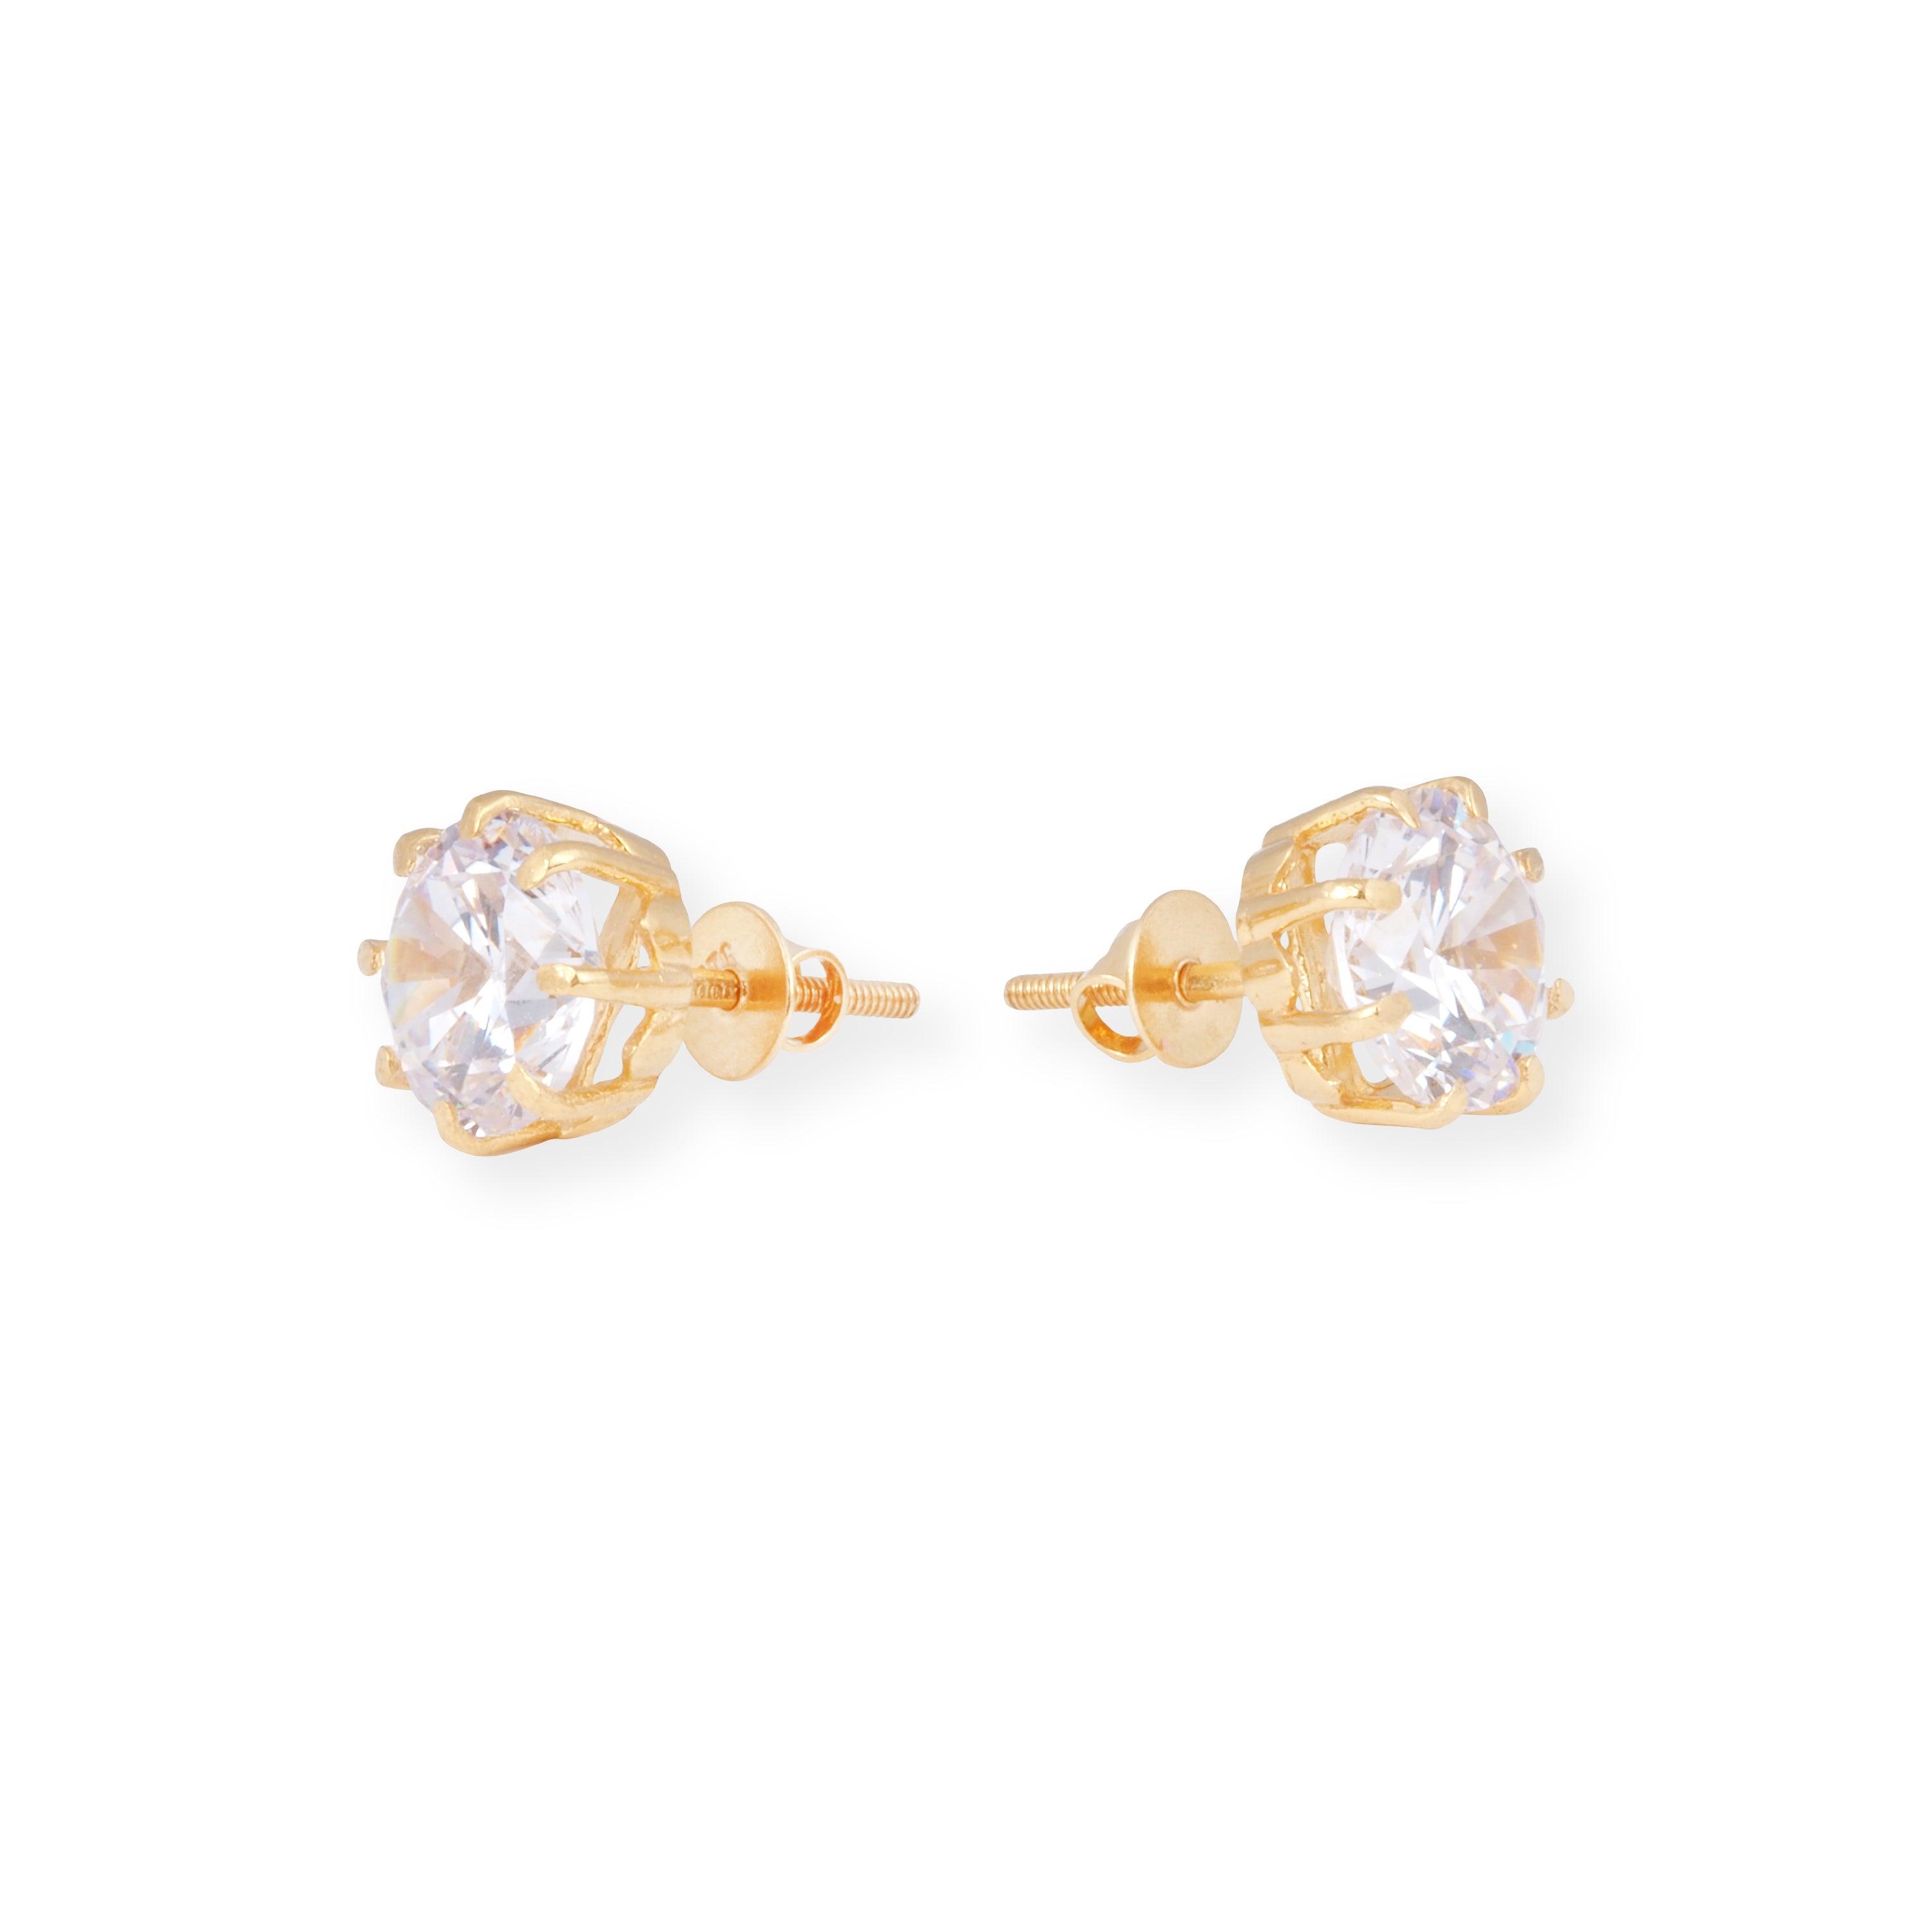 22ct Yellow Gold Cubic Zirconia Stud Earrings E-8530 - Minar Jewellers